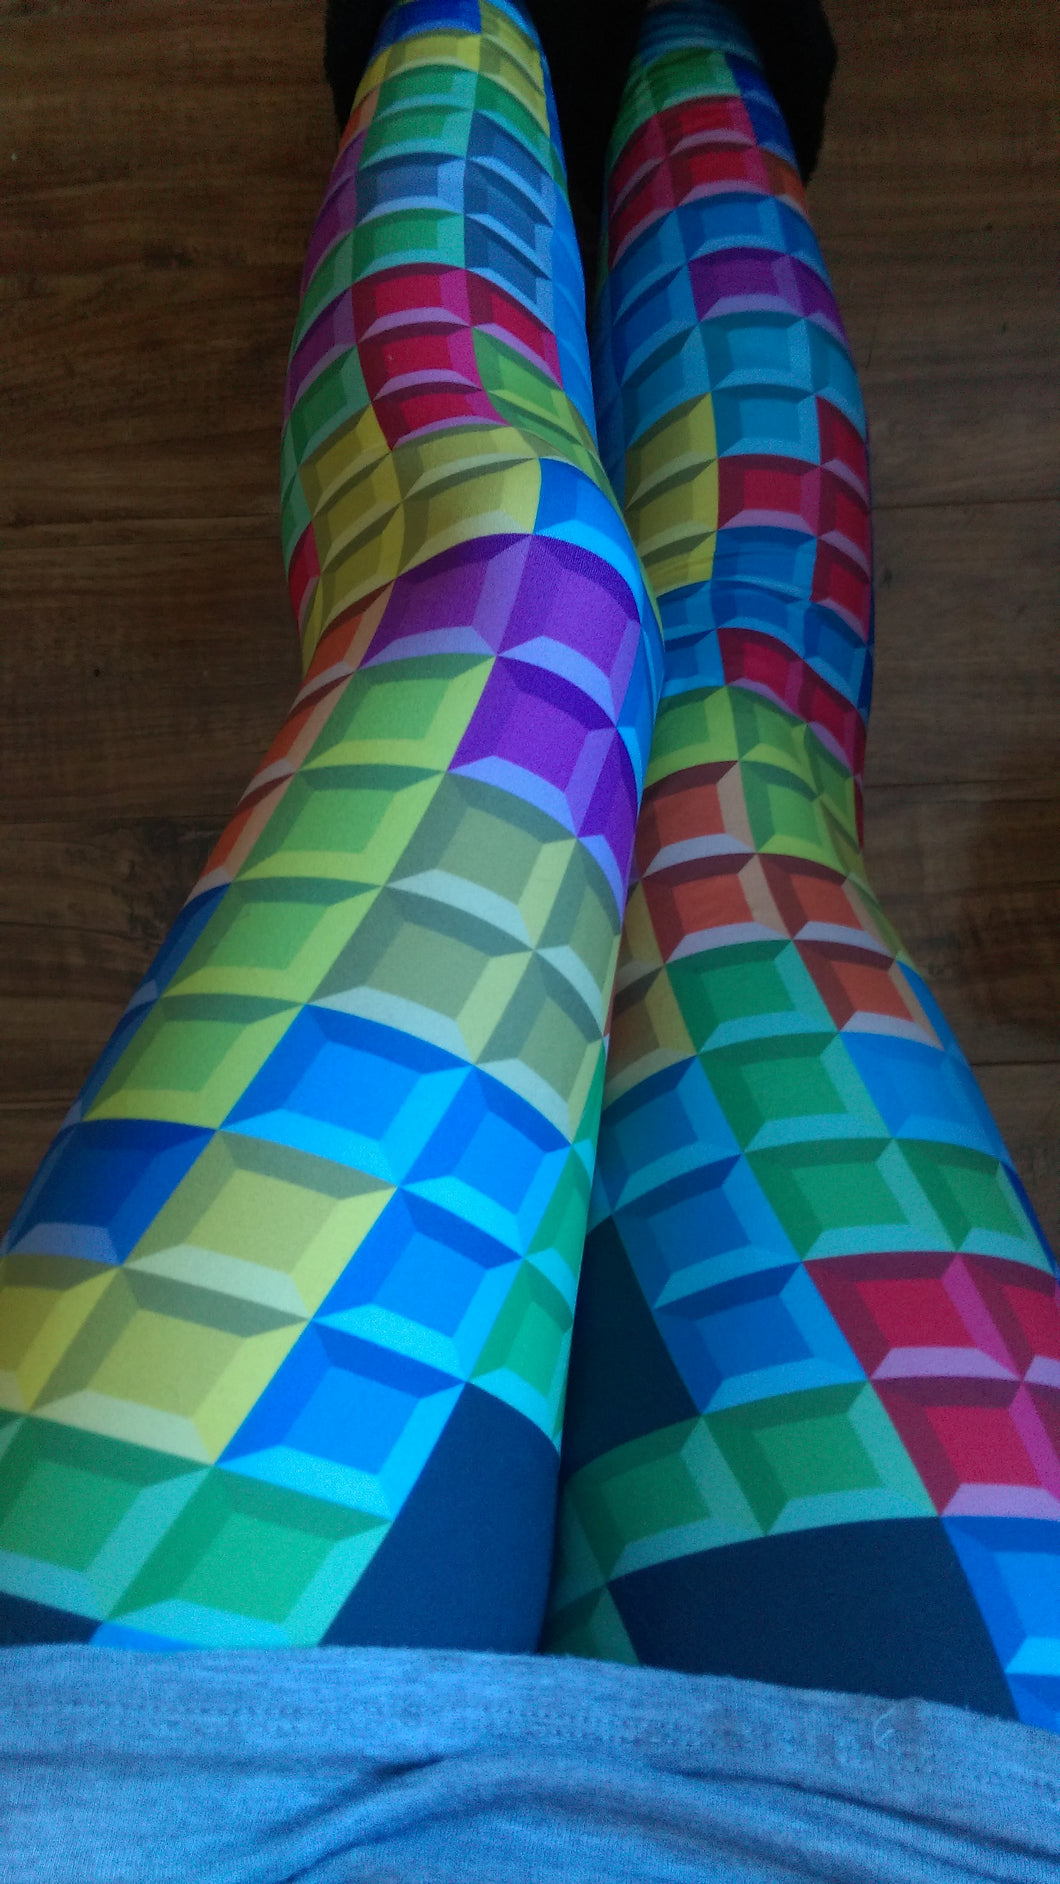 One Size Tetris Screen Printed Leggings